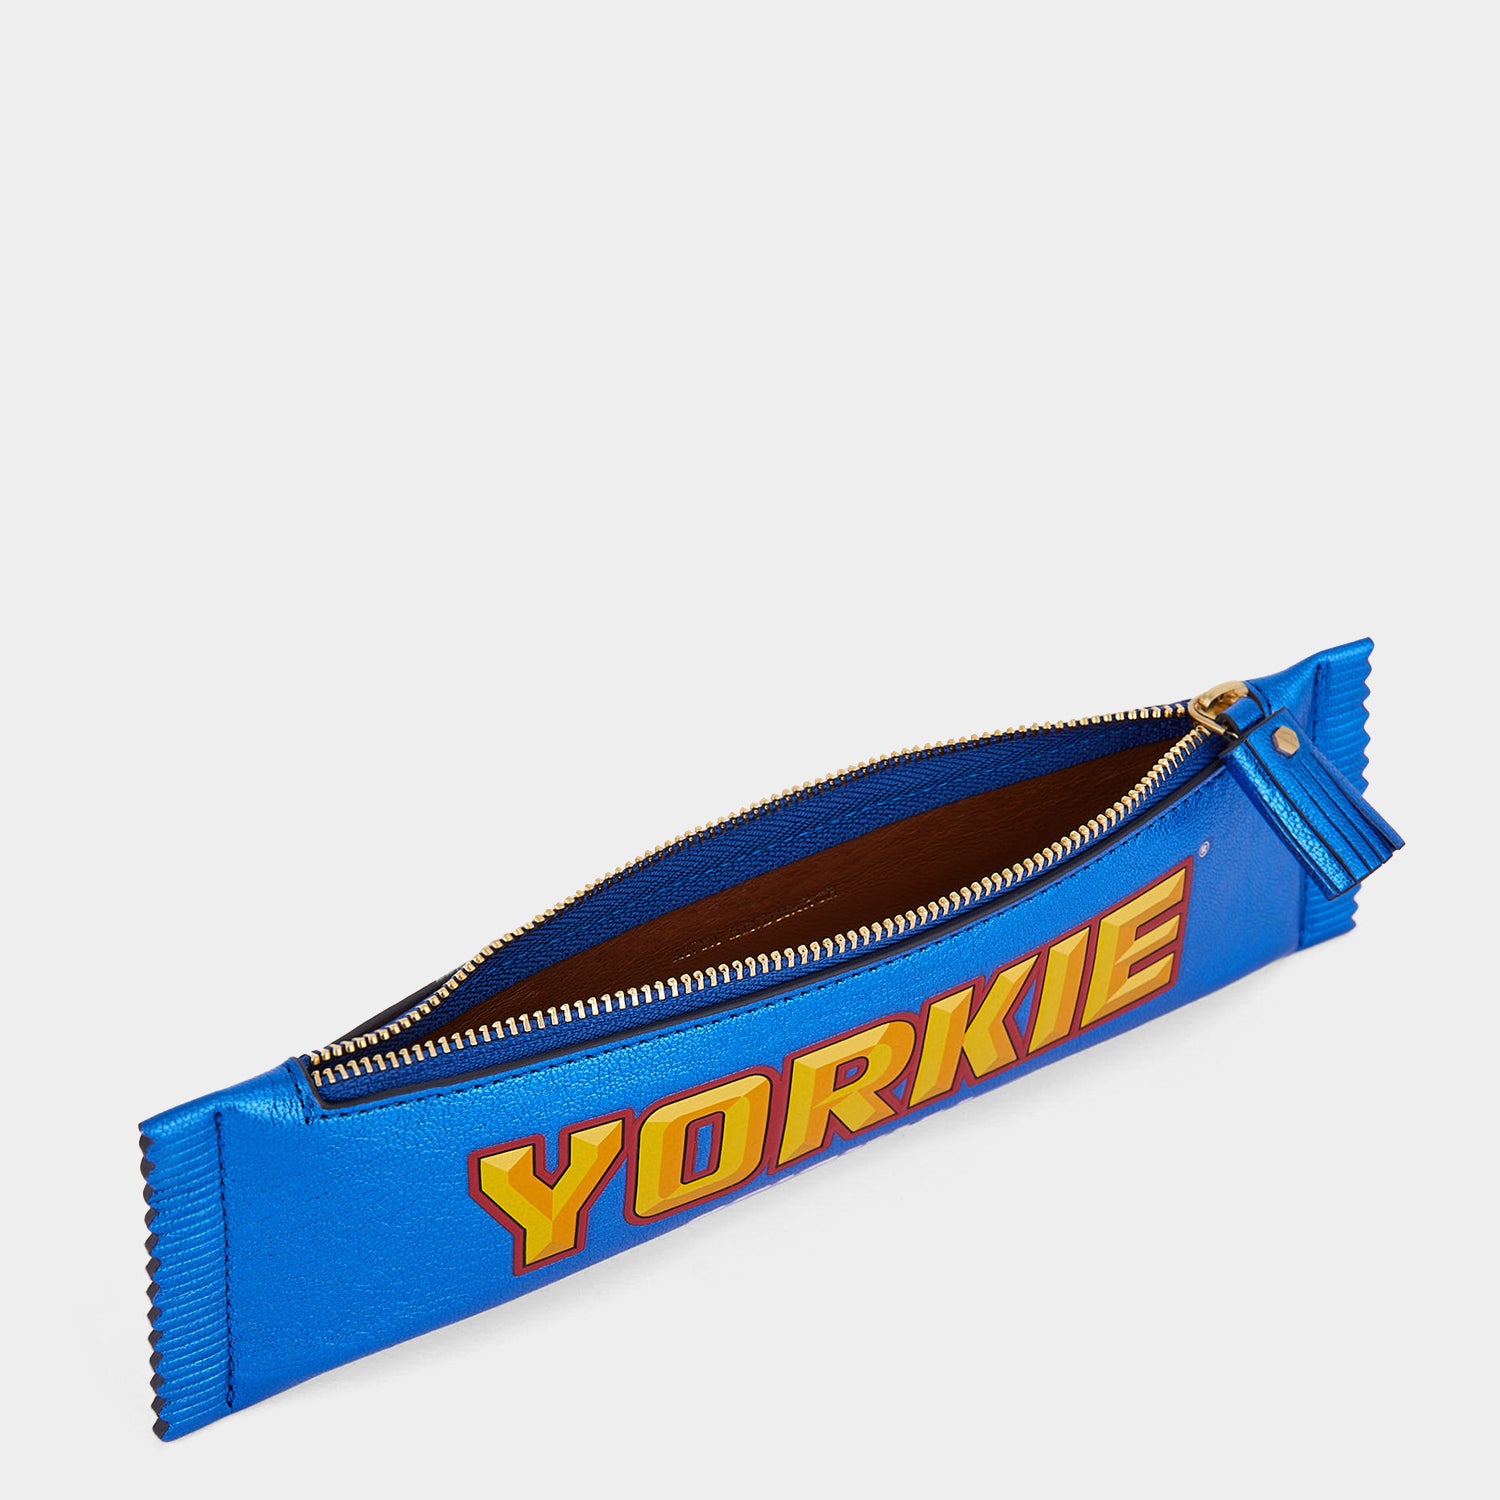 「Yorkie」ペンケース -

                  
                    Metallic Leather in Electric Blue -
                  

                  Anya Hindmarch JP
